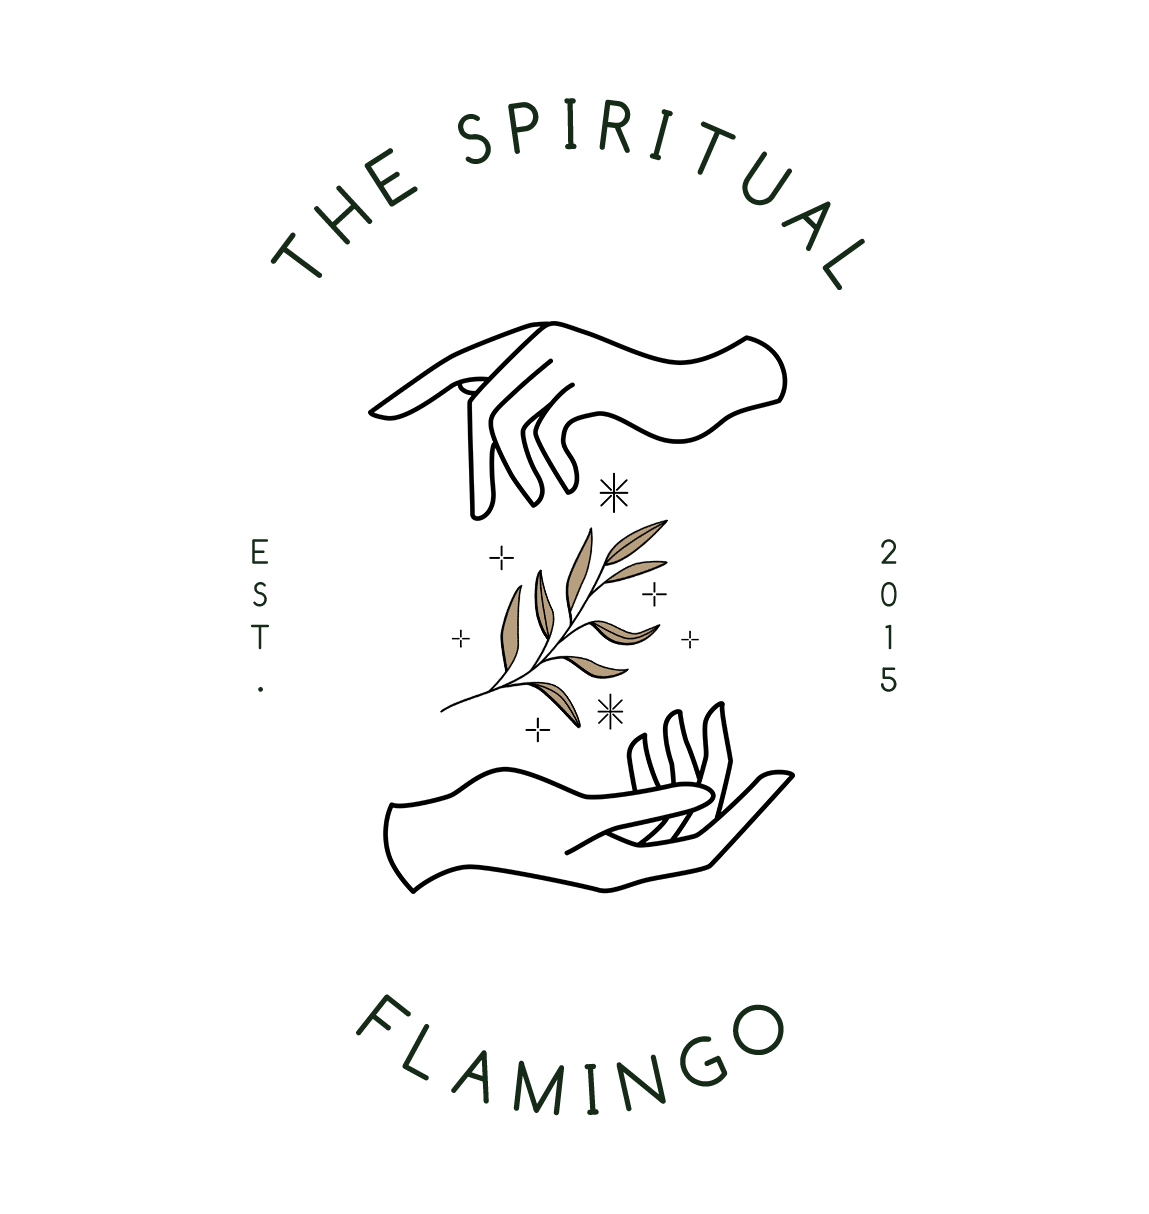 The Spiritual Flamingo logo